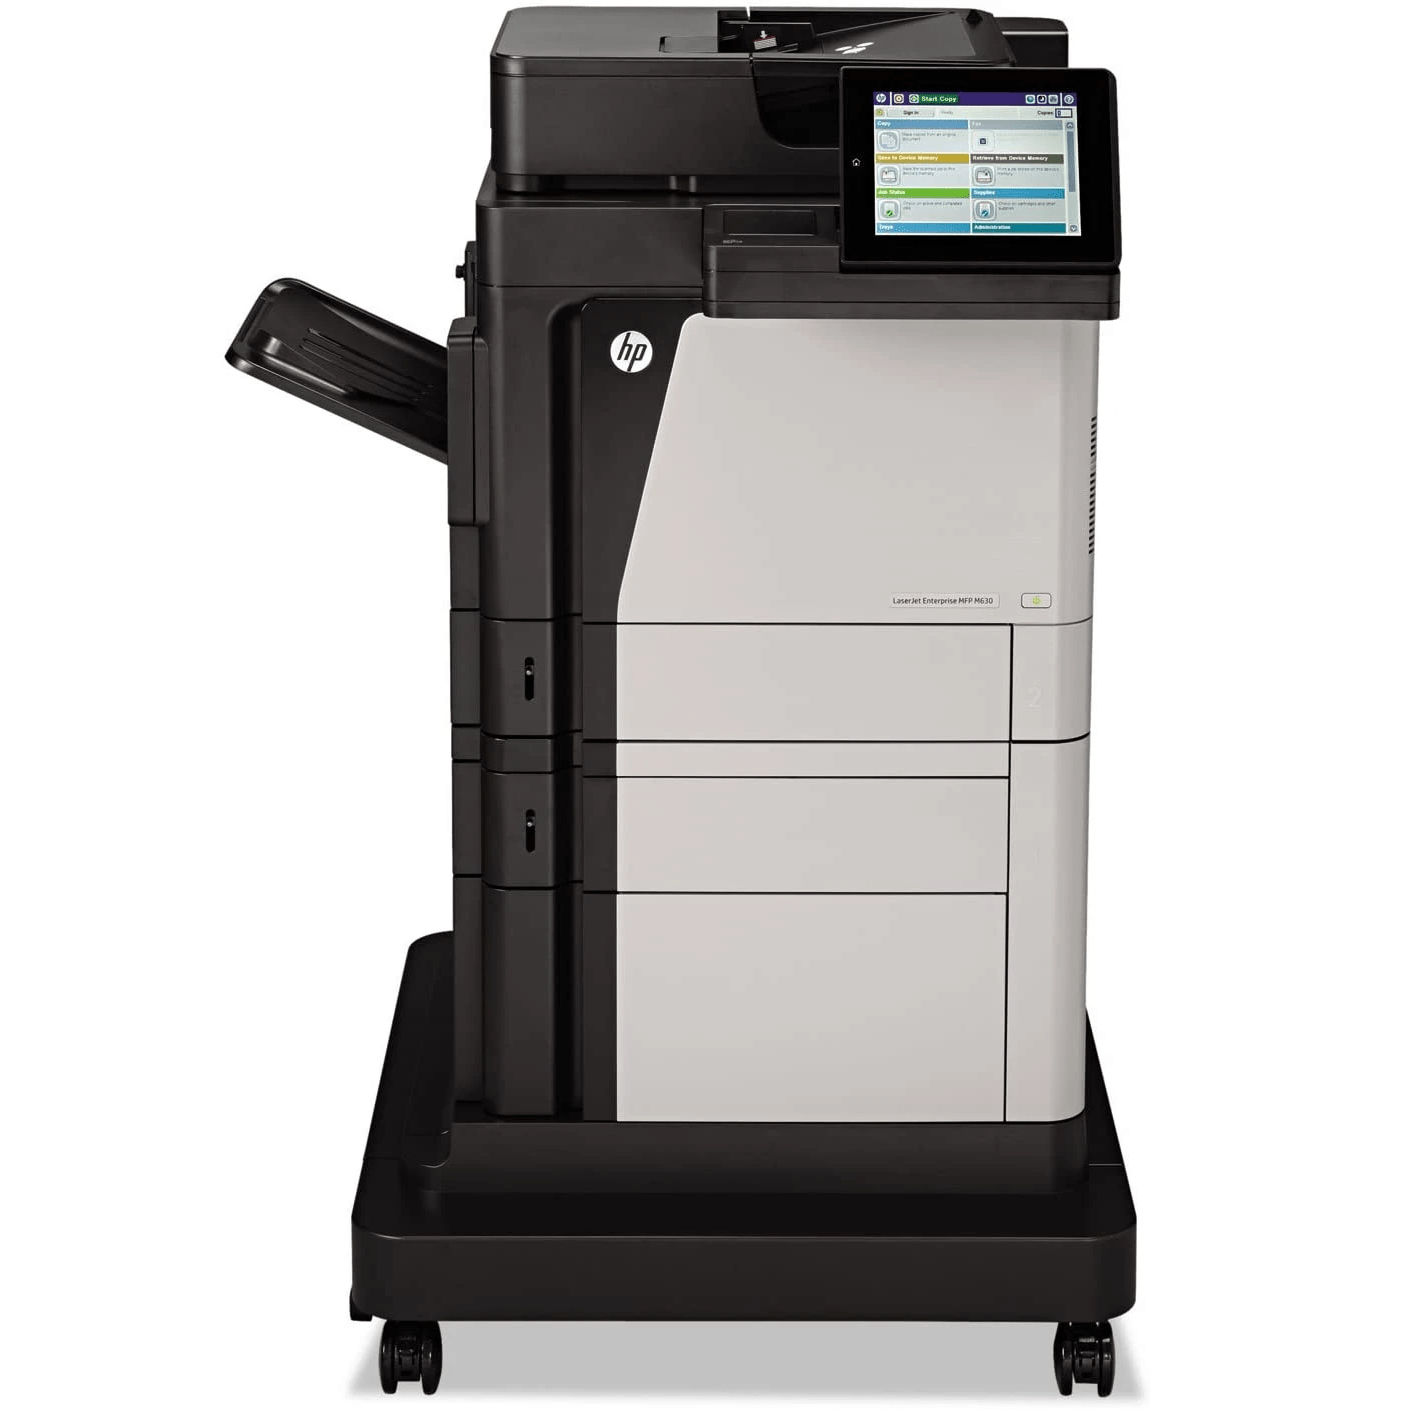 Absolute Toner HP Monochrome off-lease (B/W) LaserJet Enterprise Flow MFP M630z MFP M630 11x17 Monochrome high speed Laser Printer Laser Printer